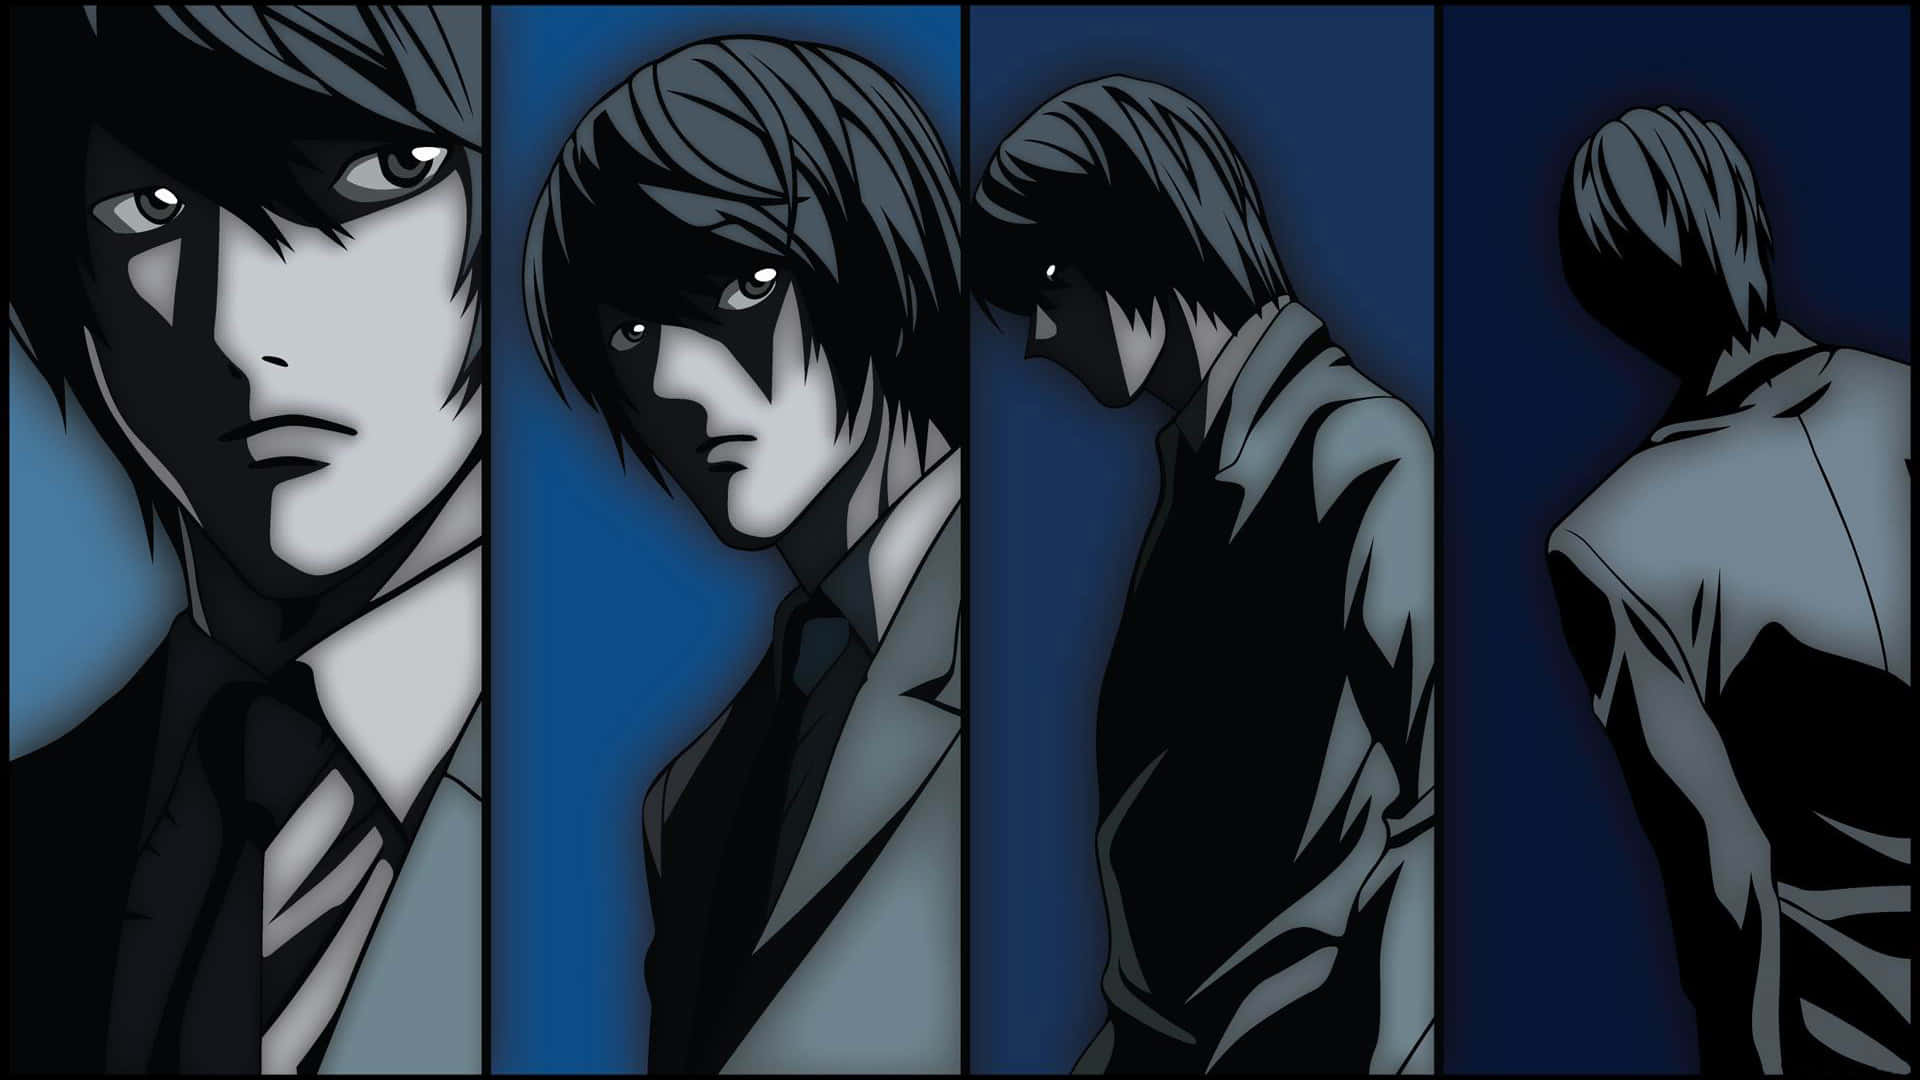 Lightyagami, Hovedpersonen I Anime-serien Death Note